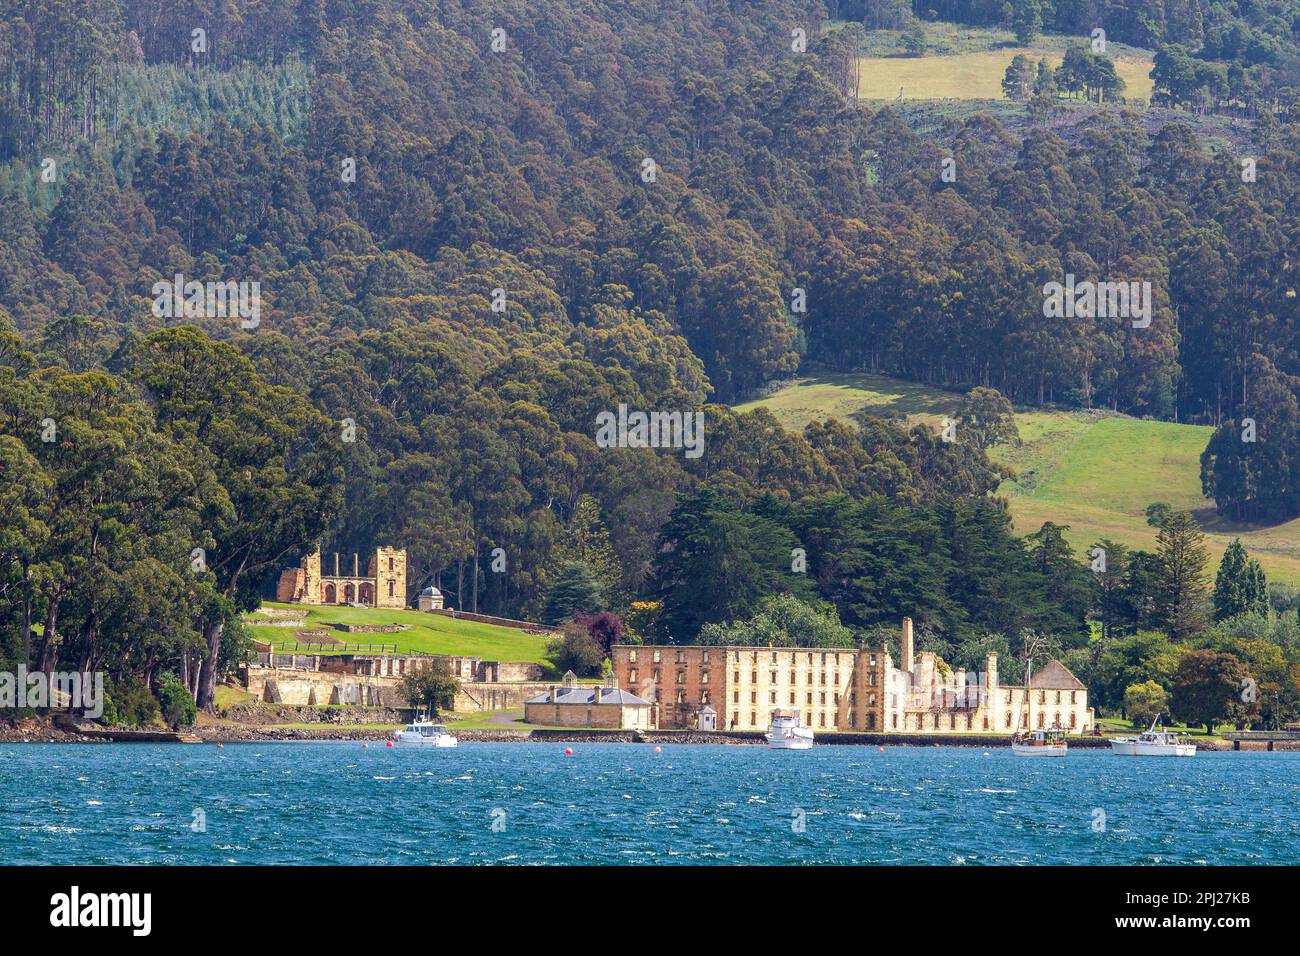 Historic convict penal settlement of Port Arthur, Tasmania Australia Stock Photo